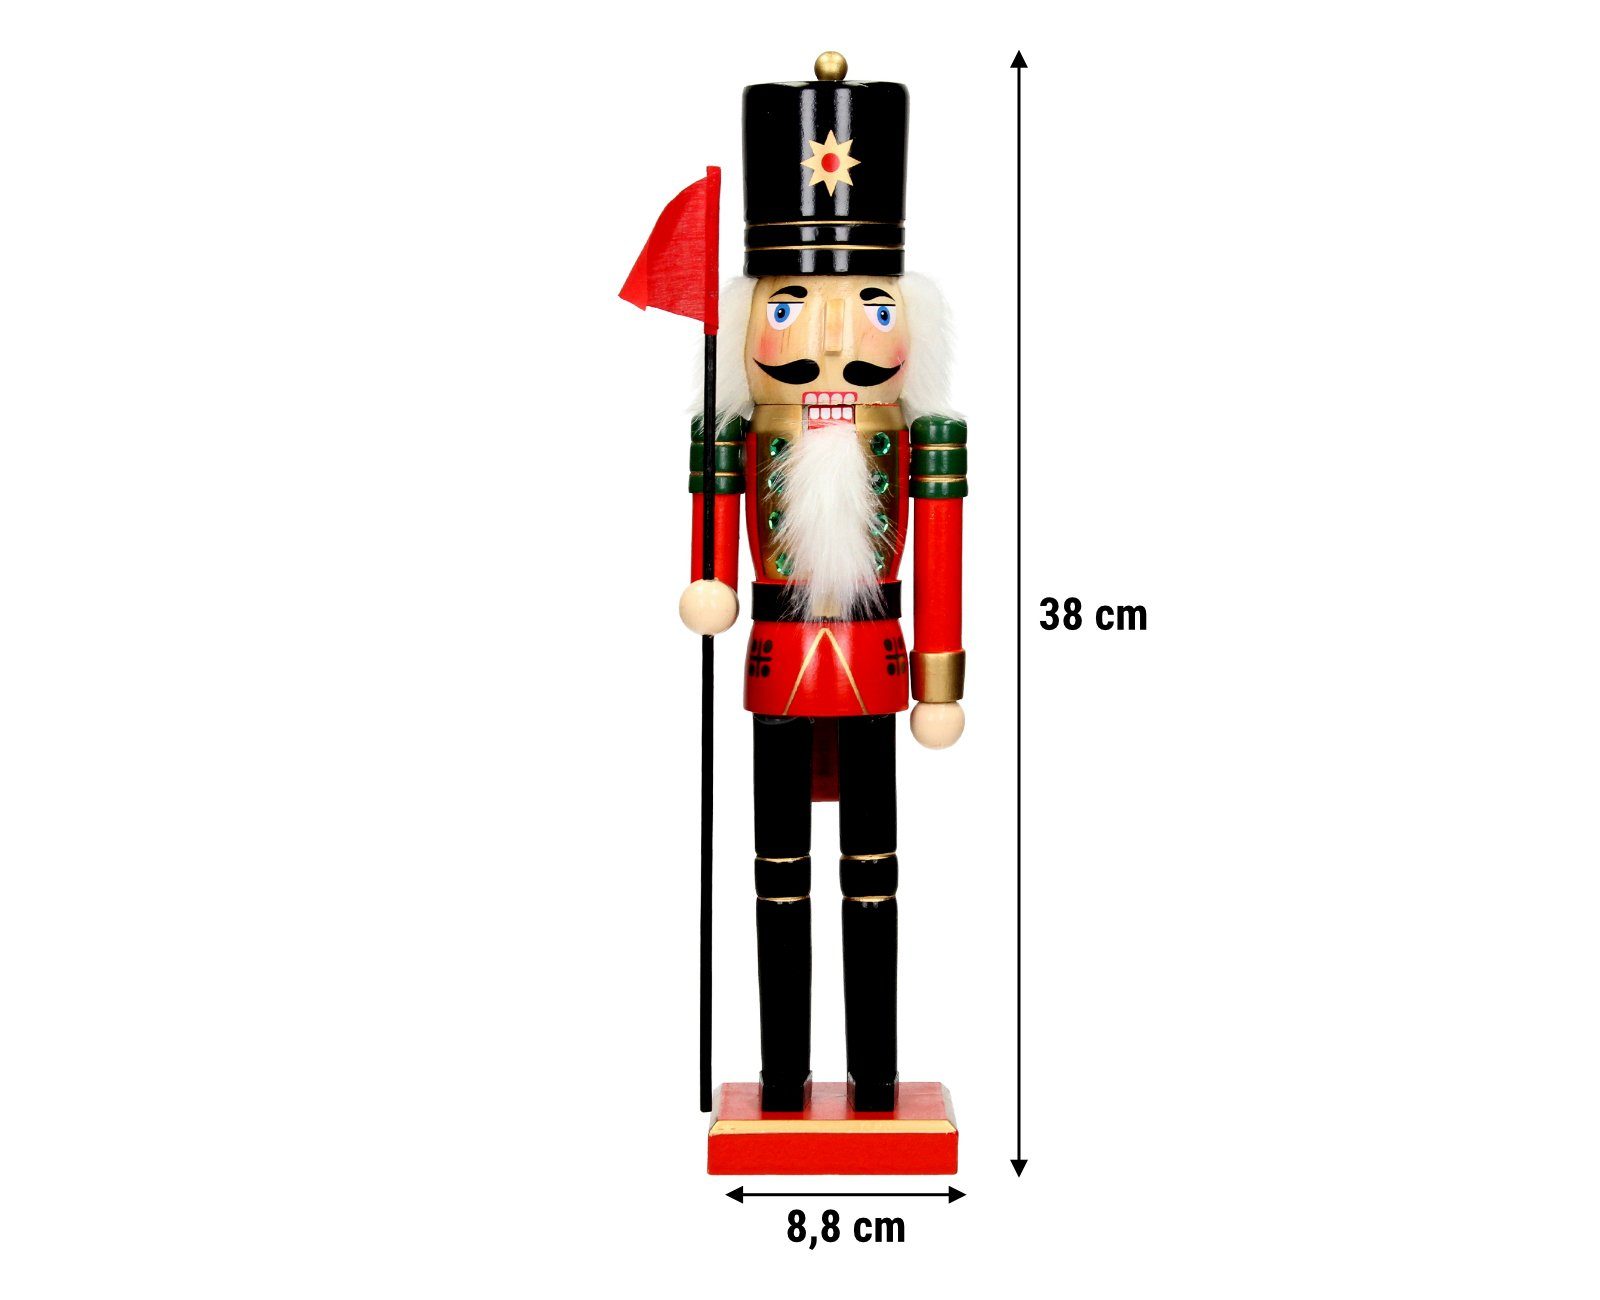 Deko Erzgebirge schwarz Unikat Nussbeisser Nussknacker HAGO Holz Volkskunst Figur Weihnachtsfigur